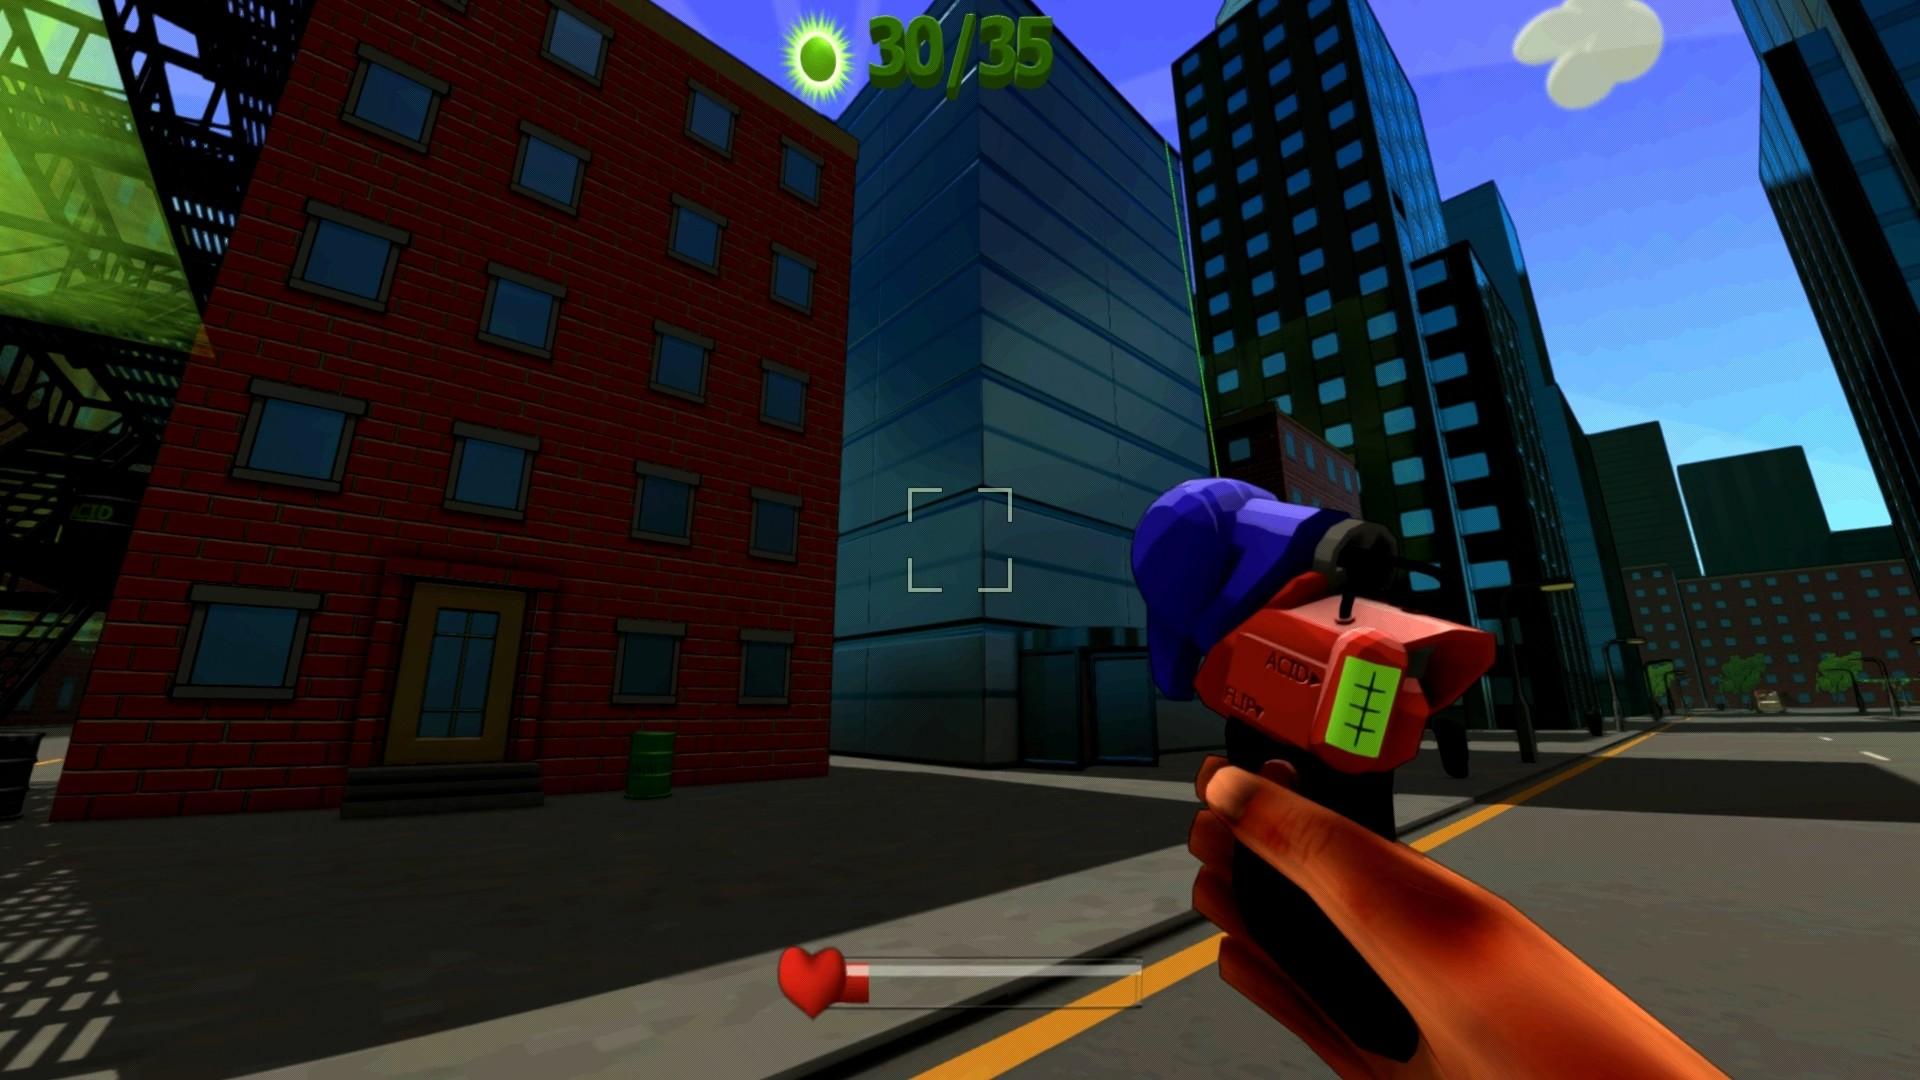 Screenshot №12 from game Acid Flip